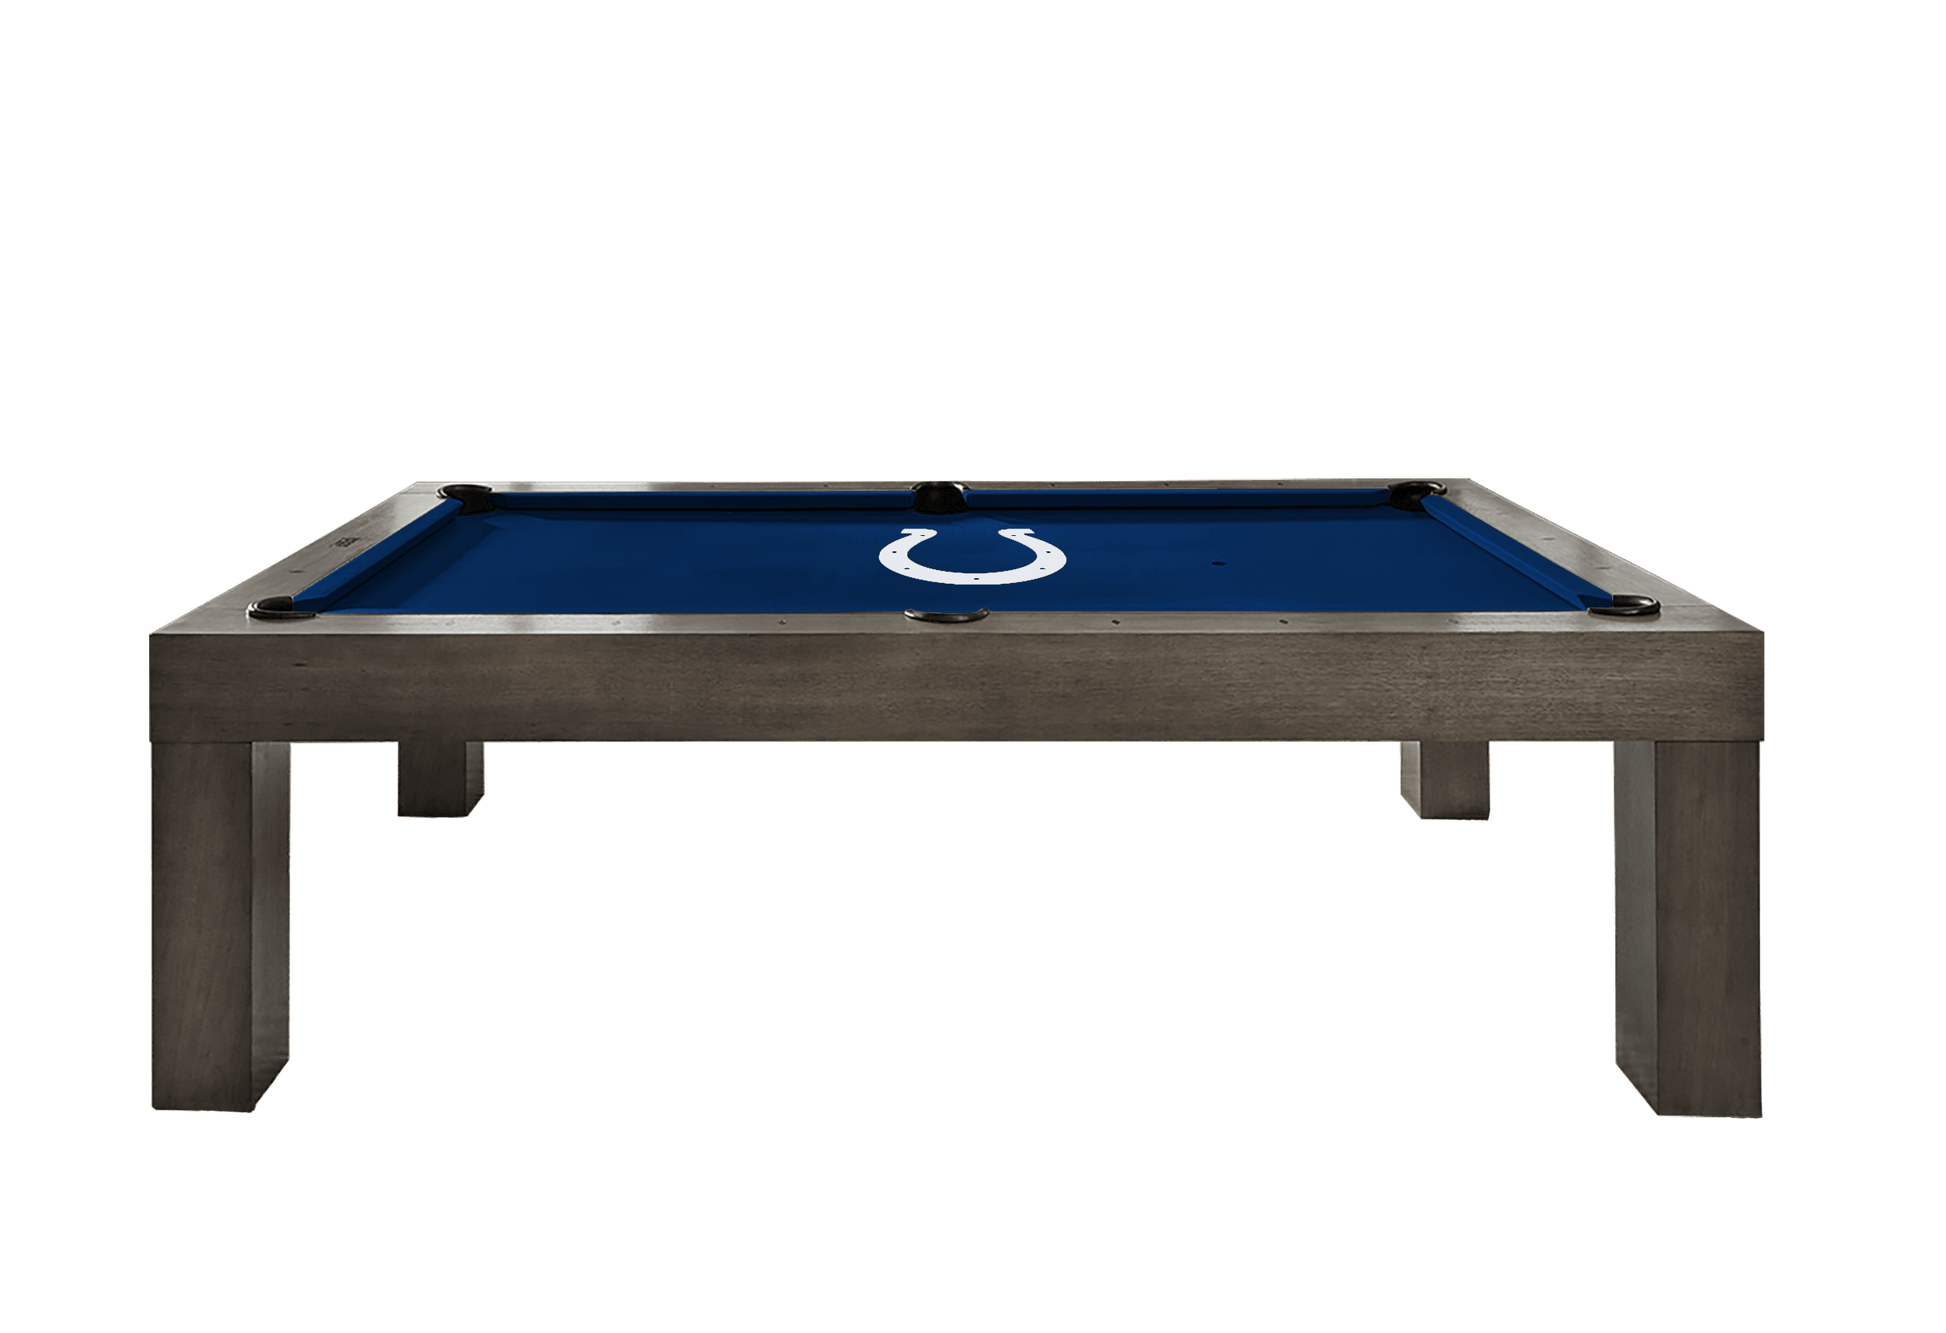 Indianapolis Colts Premium Pool Table Bundle - Charcoal Pool Bundle Home Arcade Games   